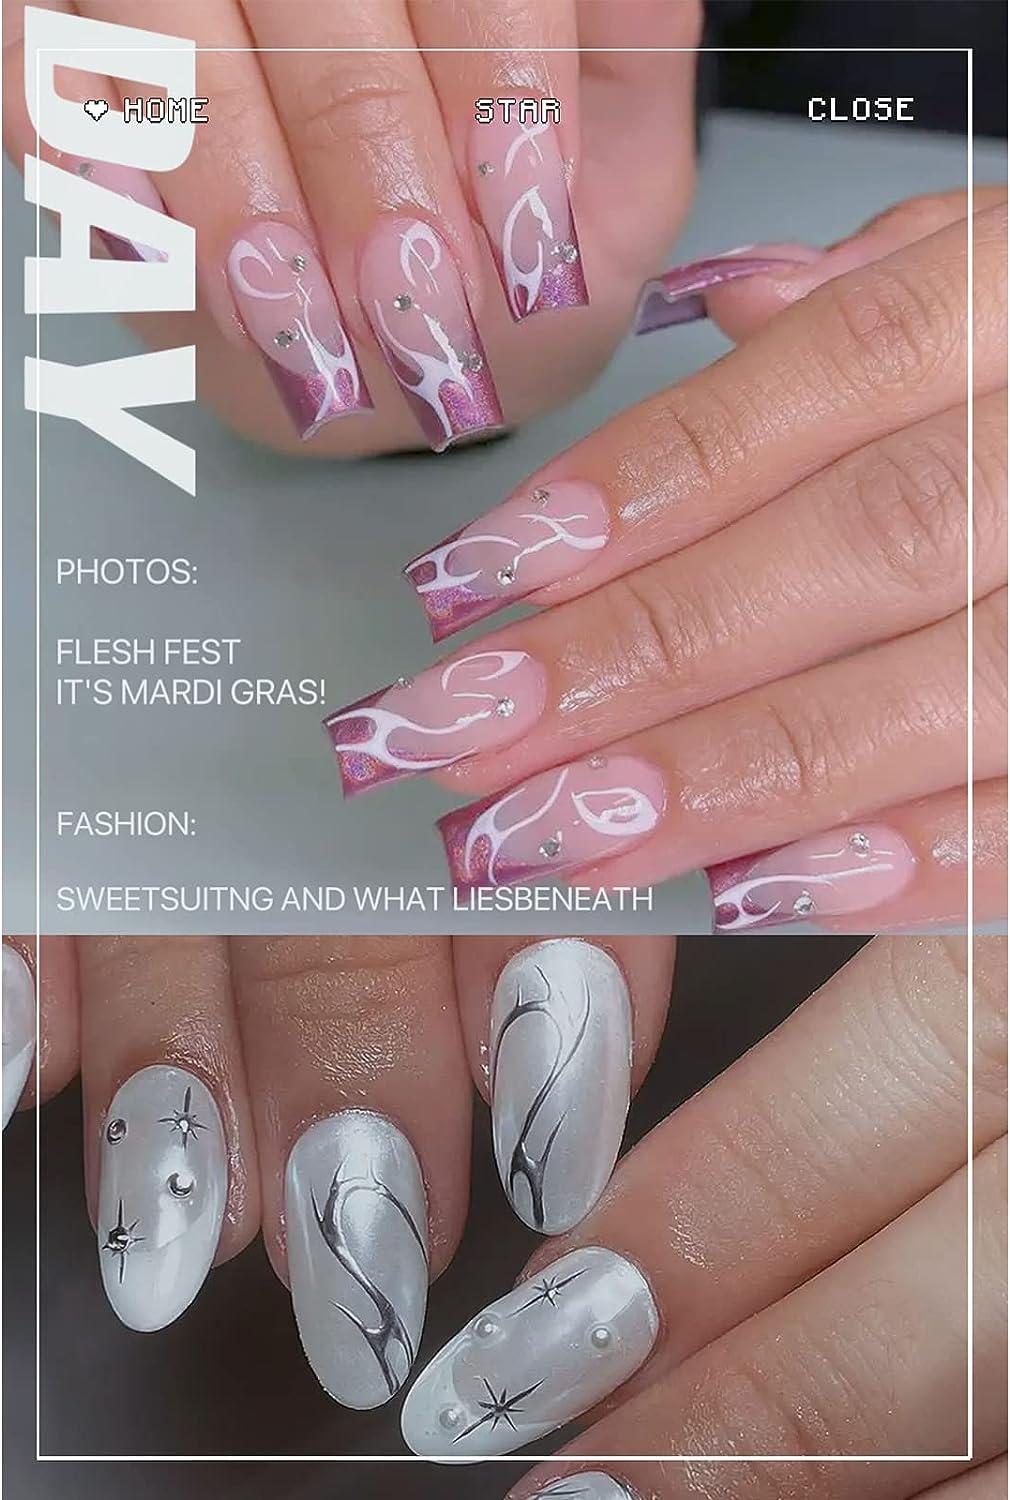 Metallic Nails - Beauty Photos, Trends & News | Allure